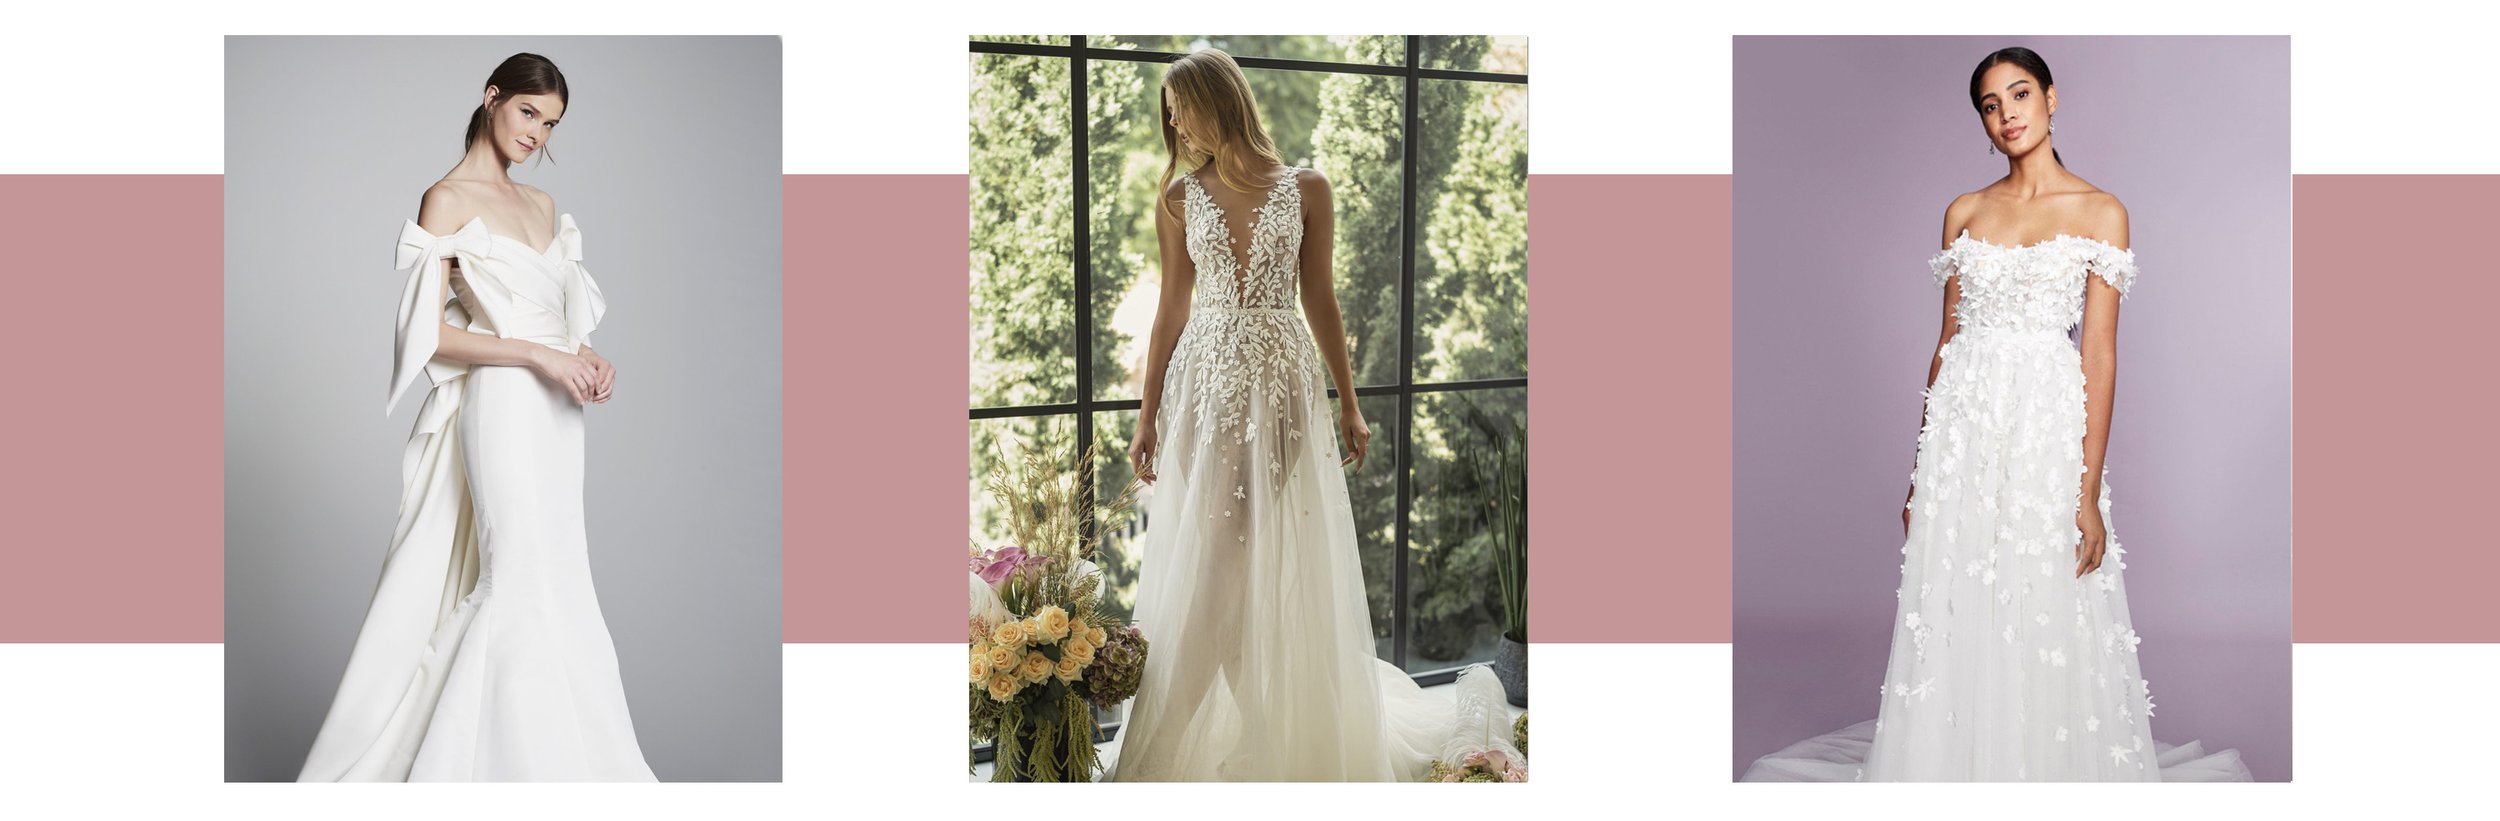 Wedding Dresses - The White Flower - San Diego, CA